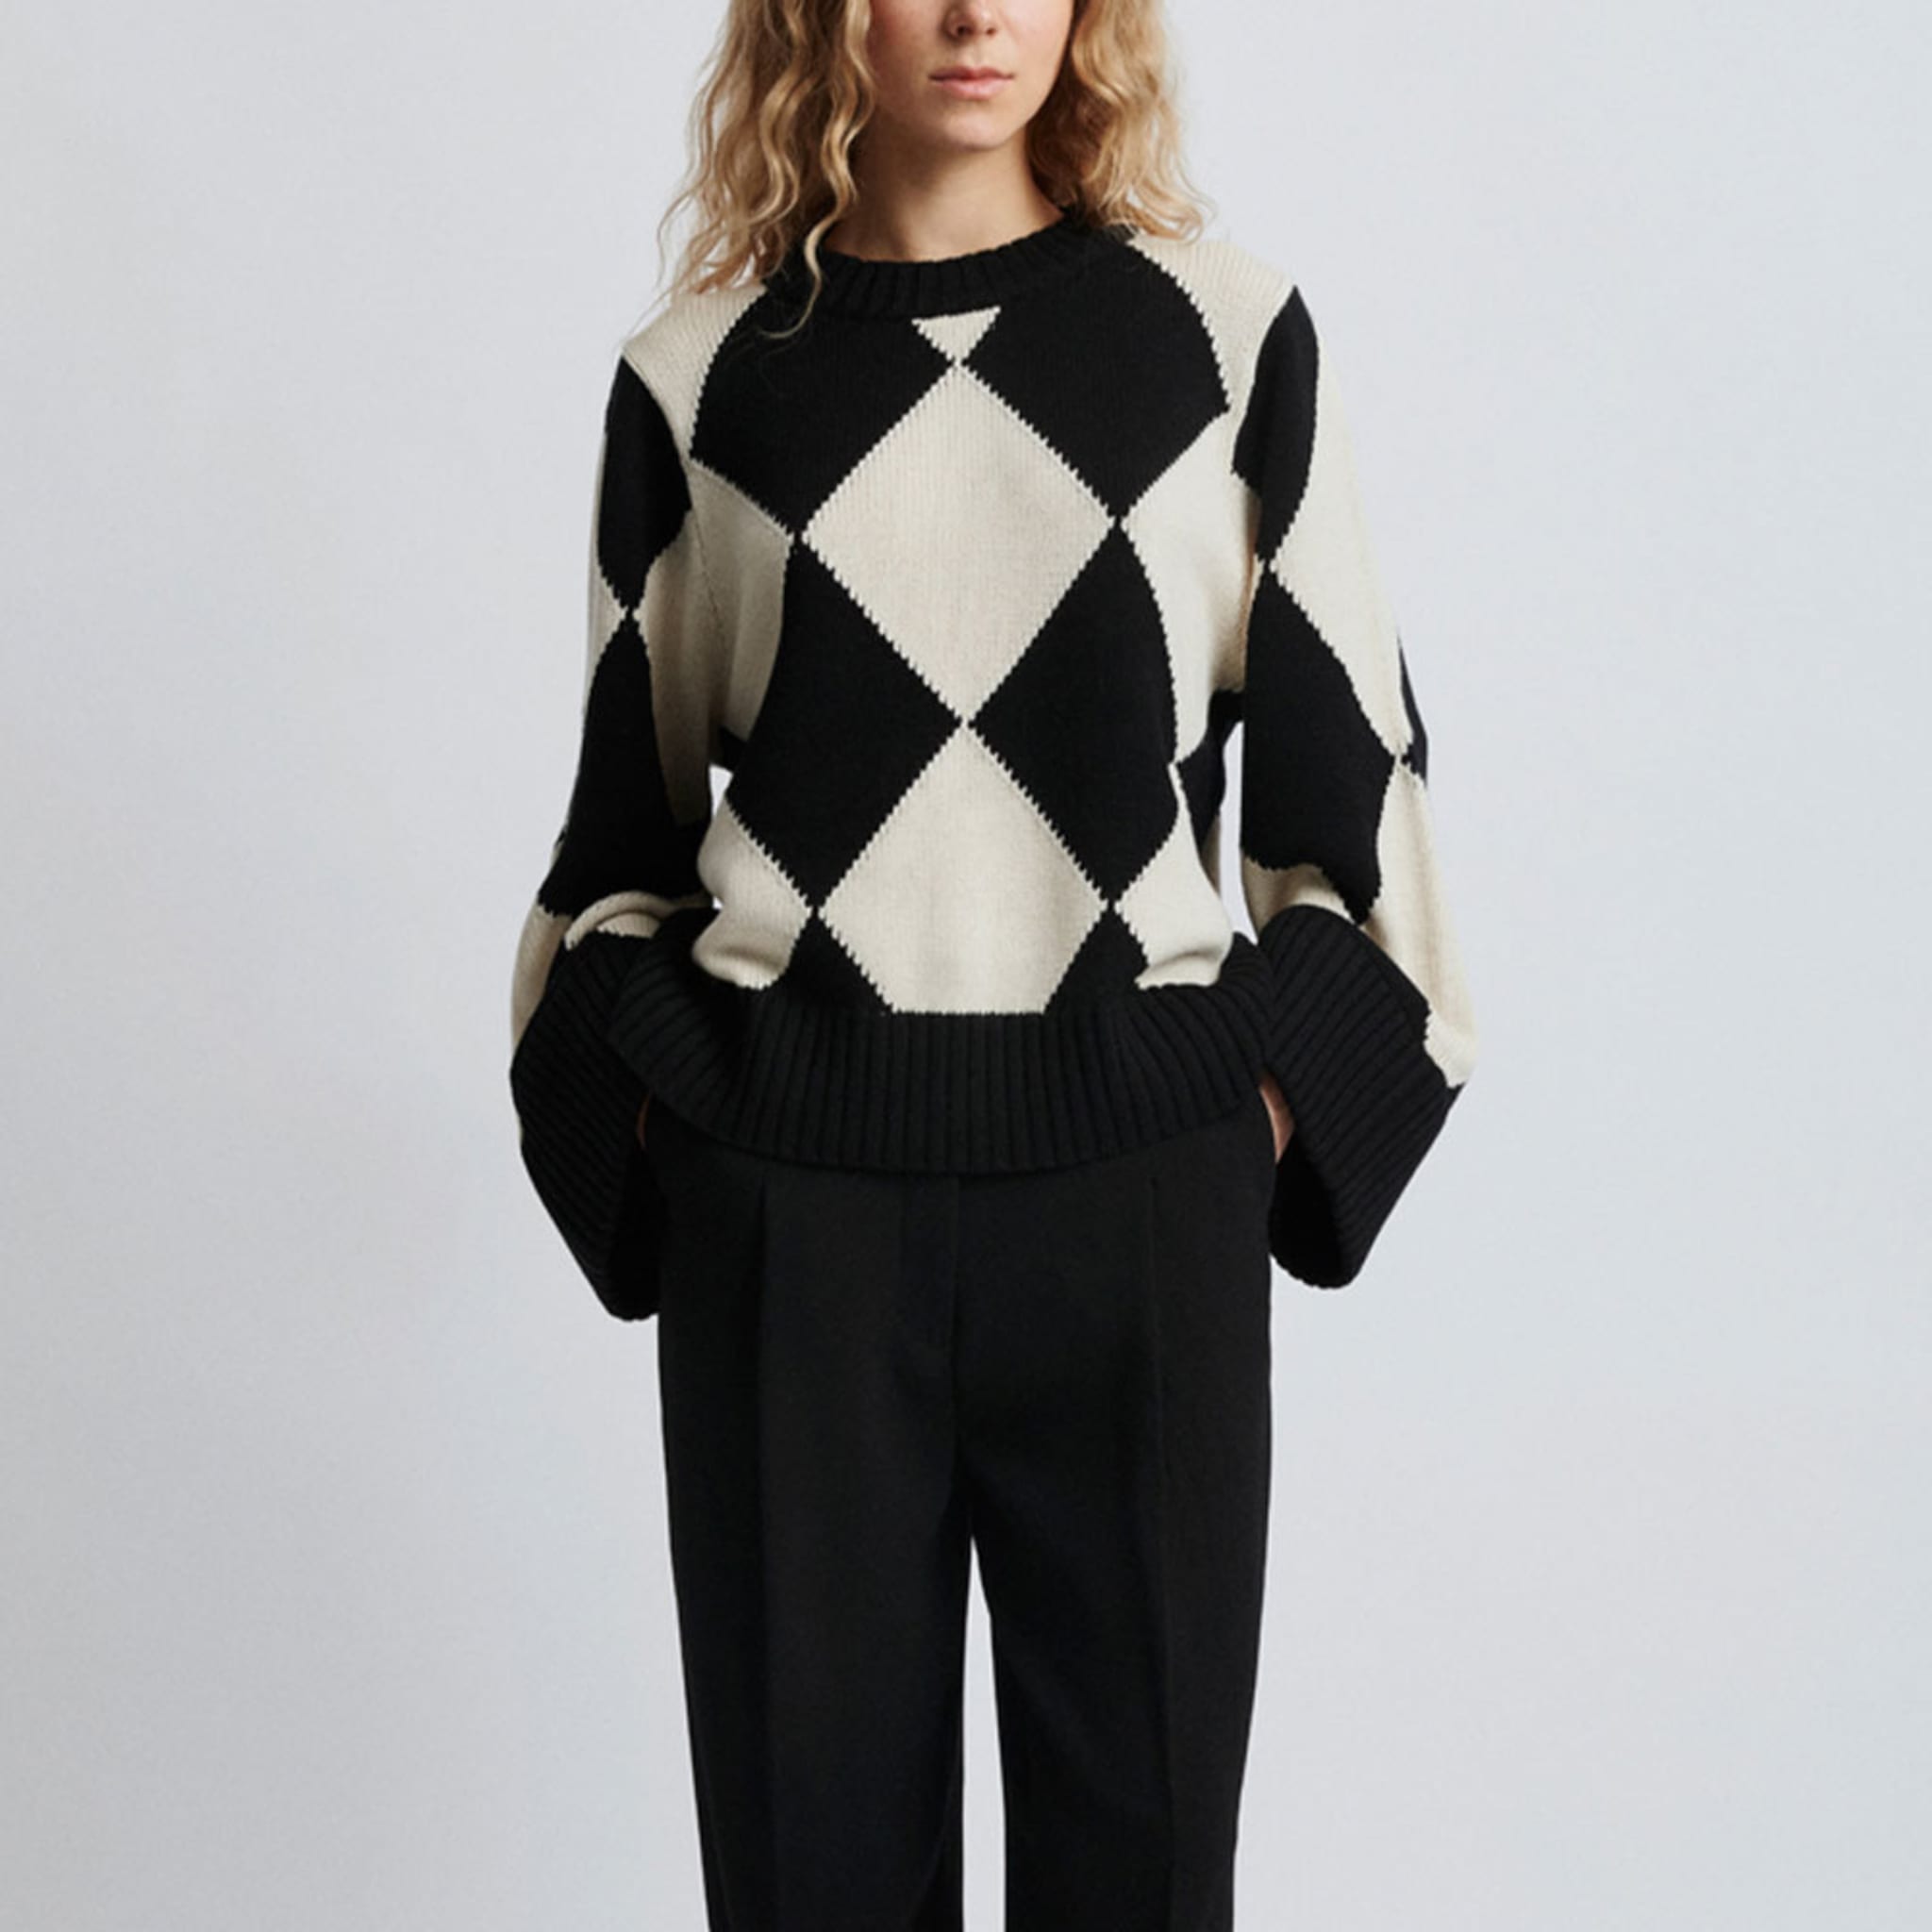 AREN Sweater, Black White